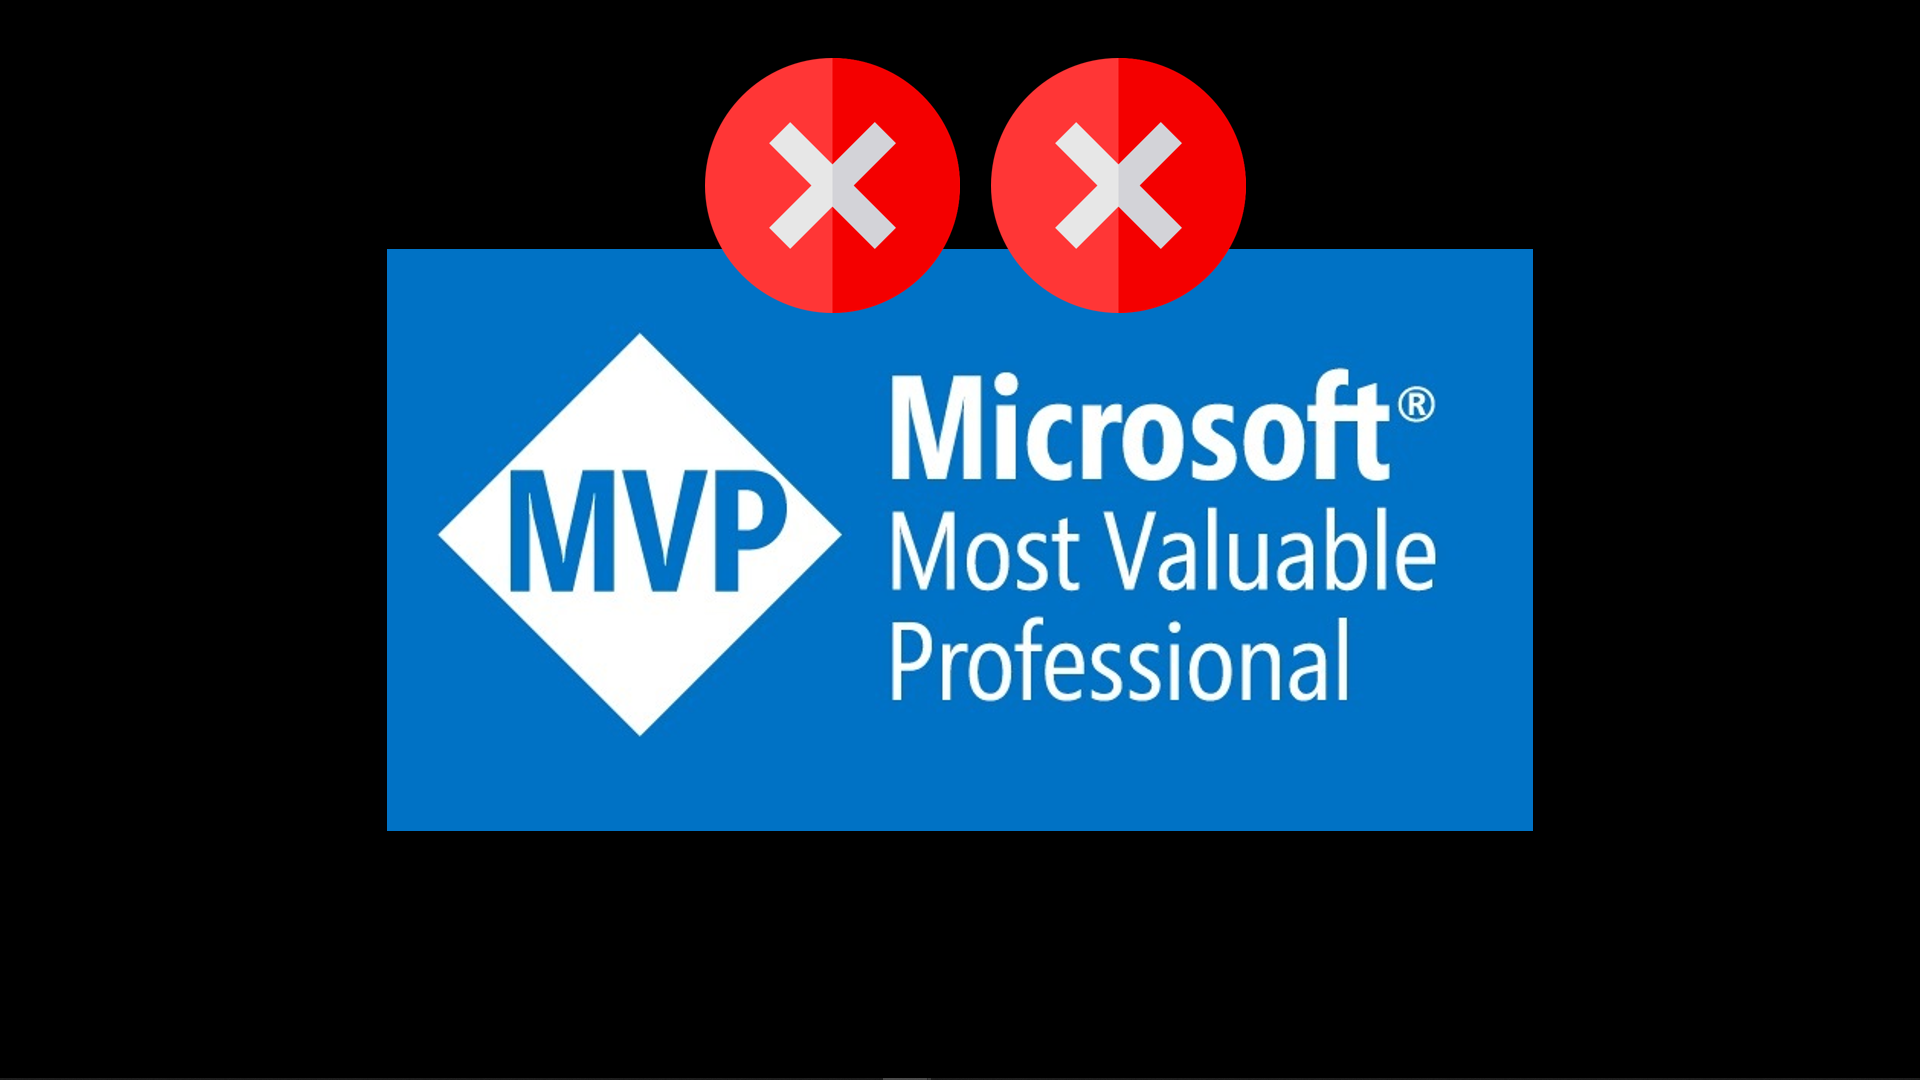 No longer a Microsoft MVP. 2nd verse